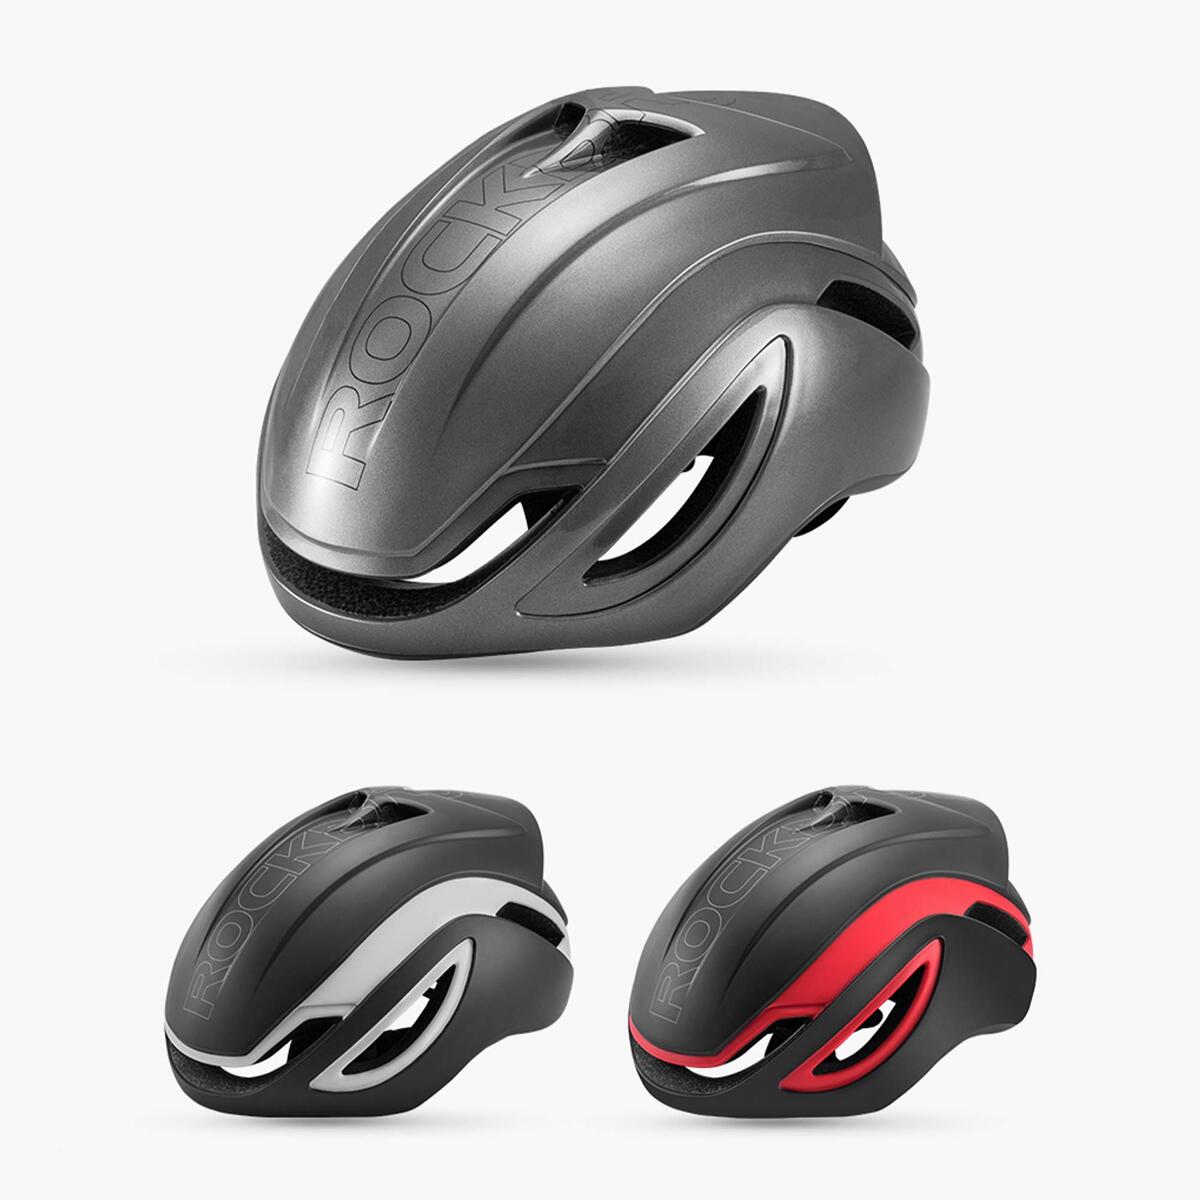 ROCKBROS Cycling Helmet Medium HC52-TI Titanium